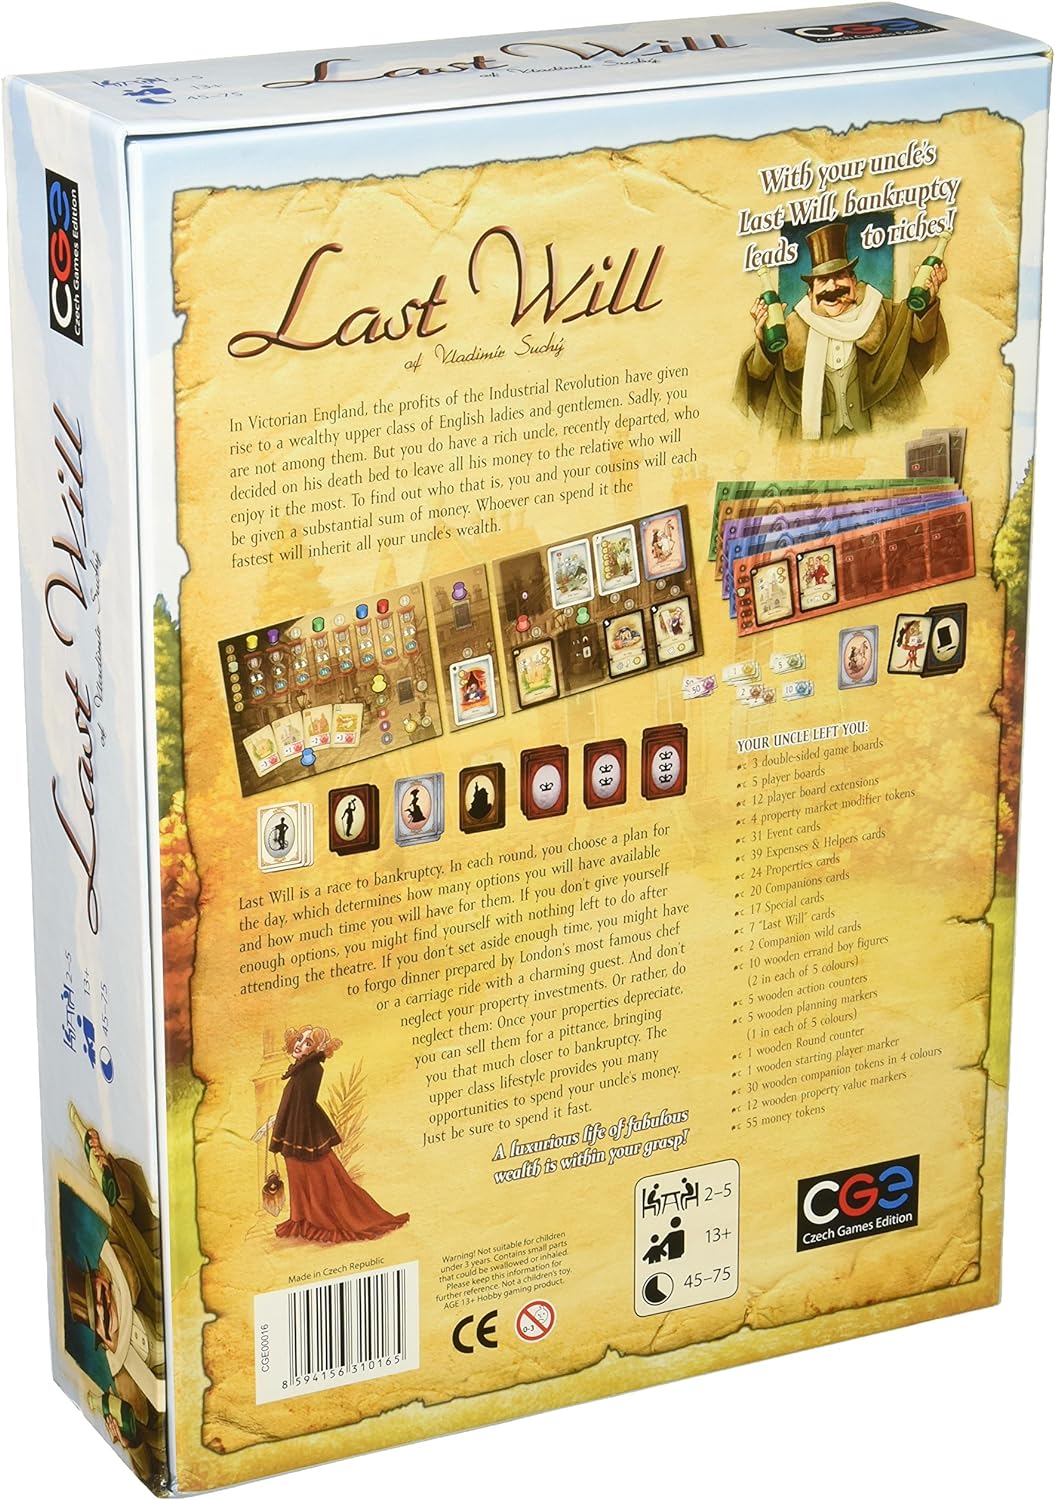 Czech Games Edition CGE00016 Last Will Board Game, Multicoloured